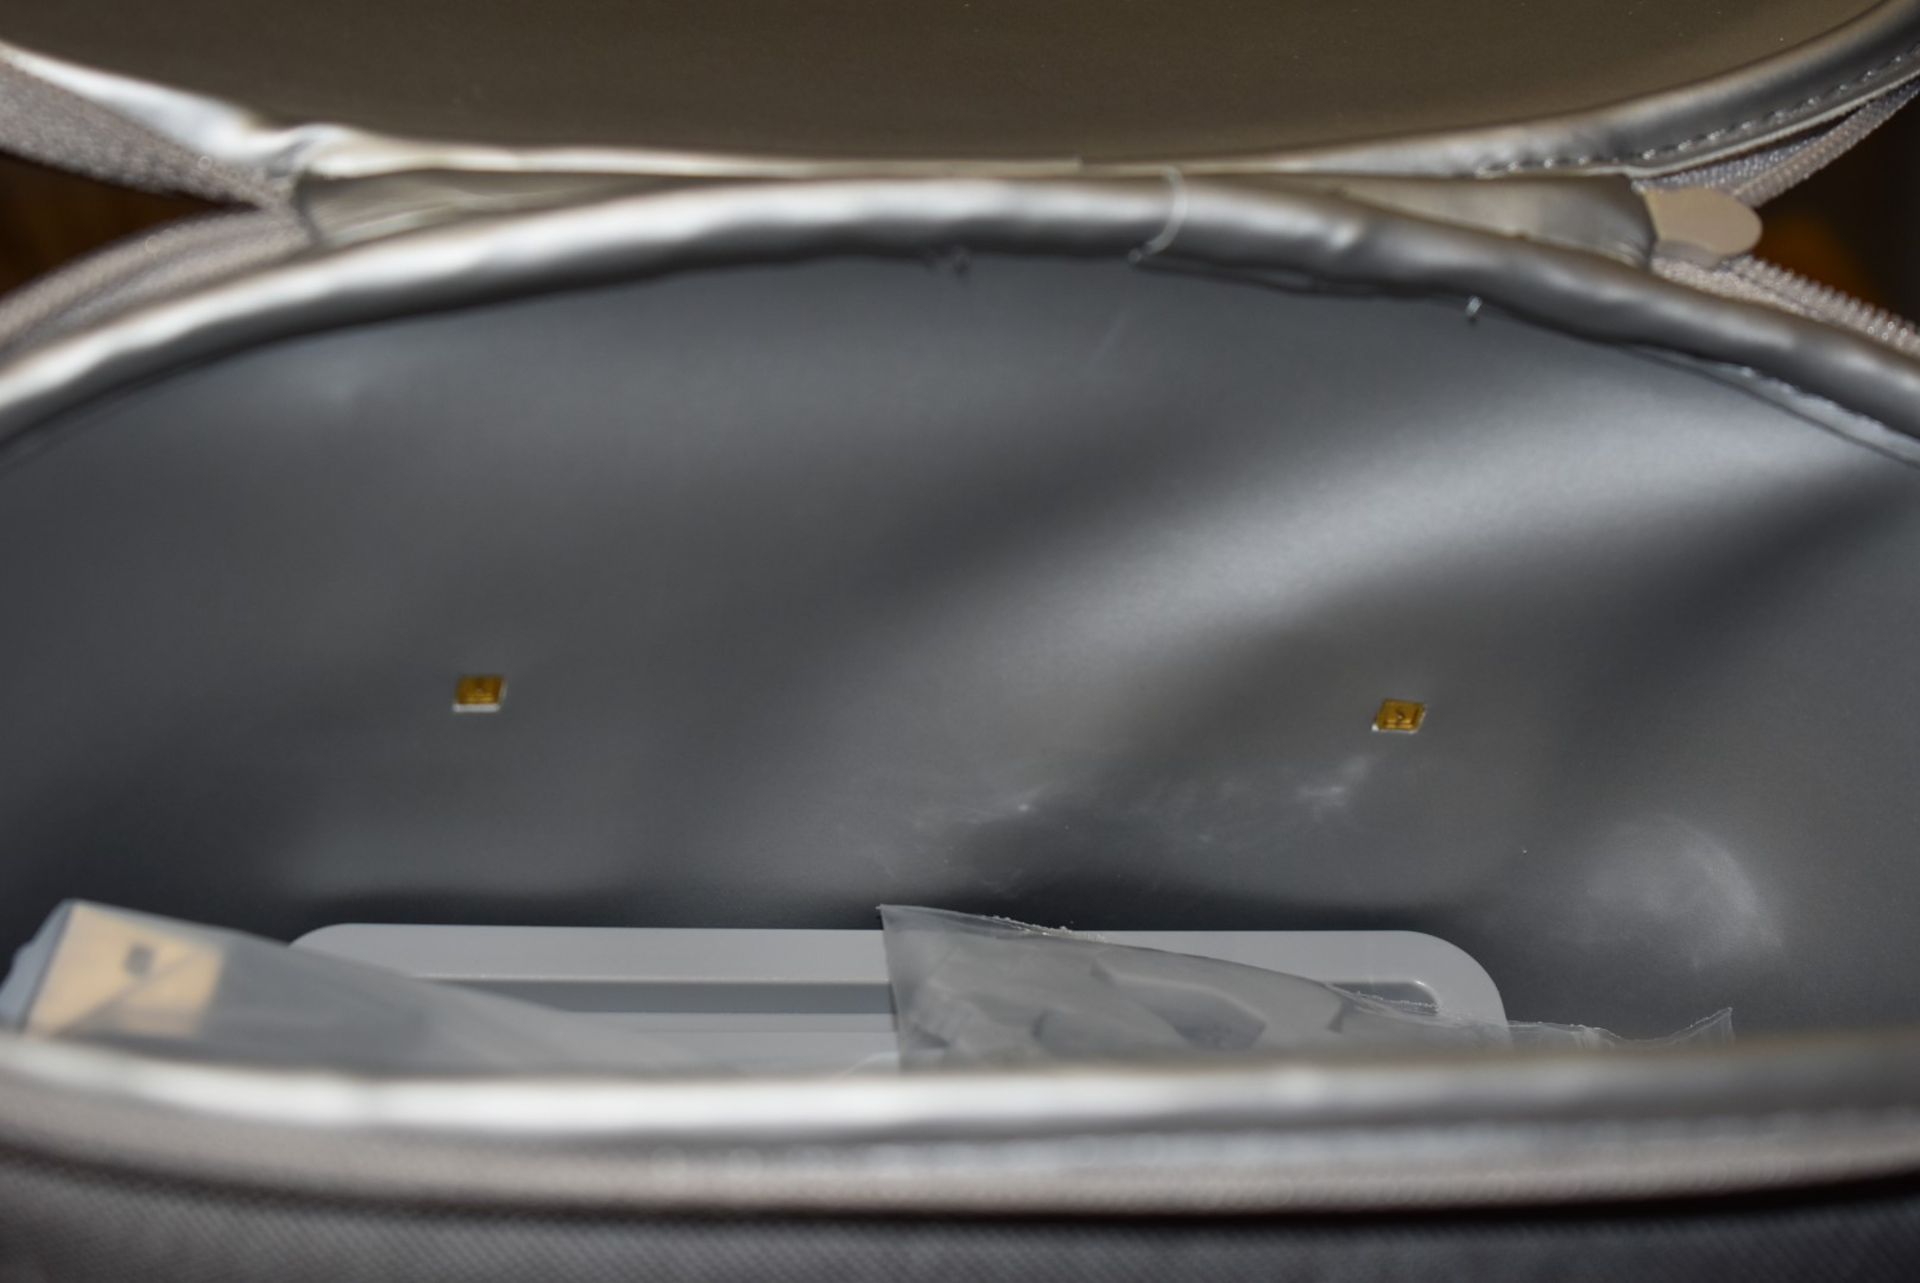 4 x Homedics UV Clean Portable Sanitiser Bags - Kills Upto 99.9% of Bacteria & Viruses in Just 60 - Image 3 of 19